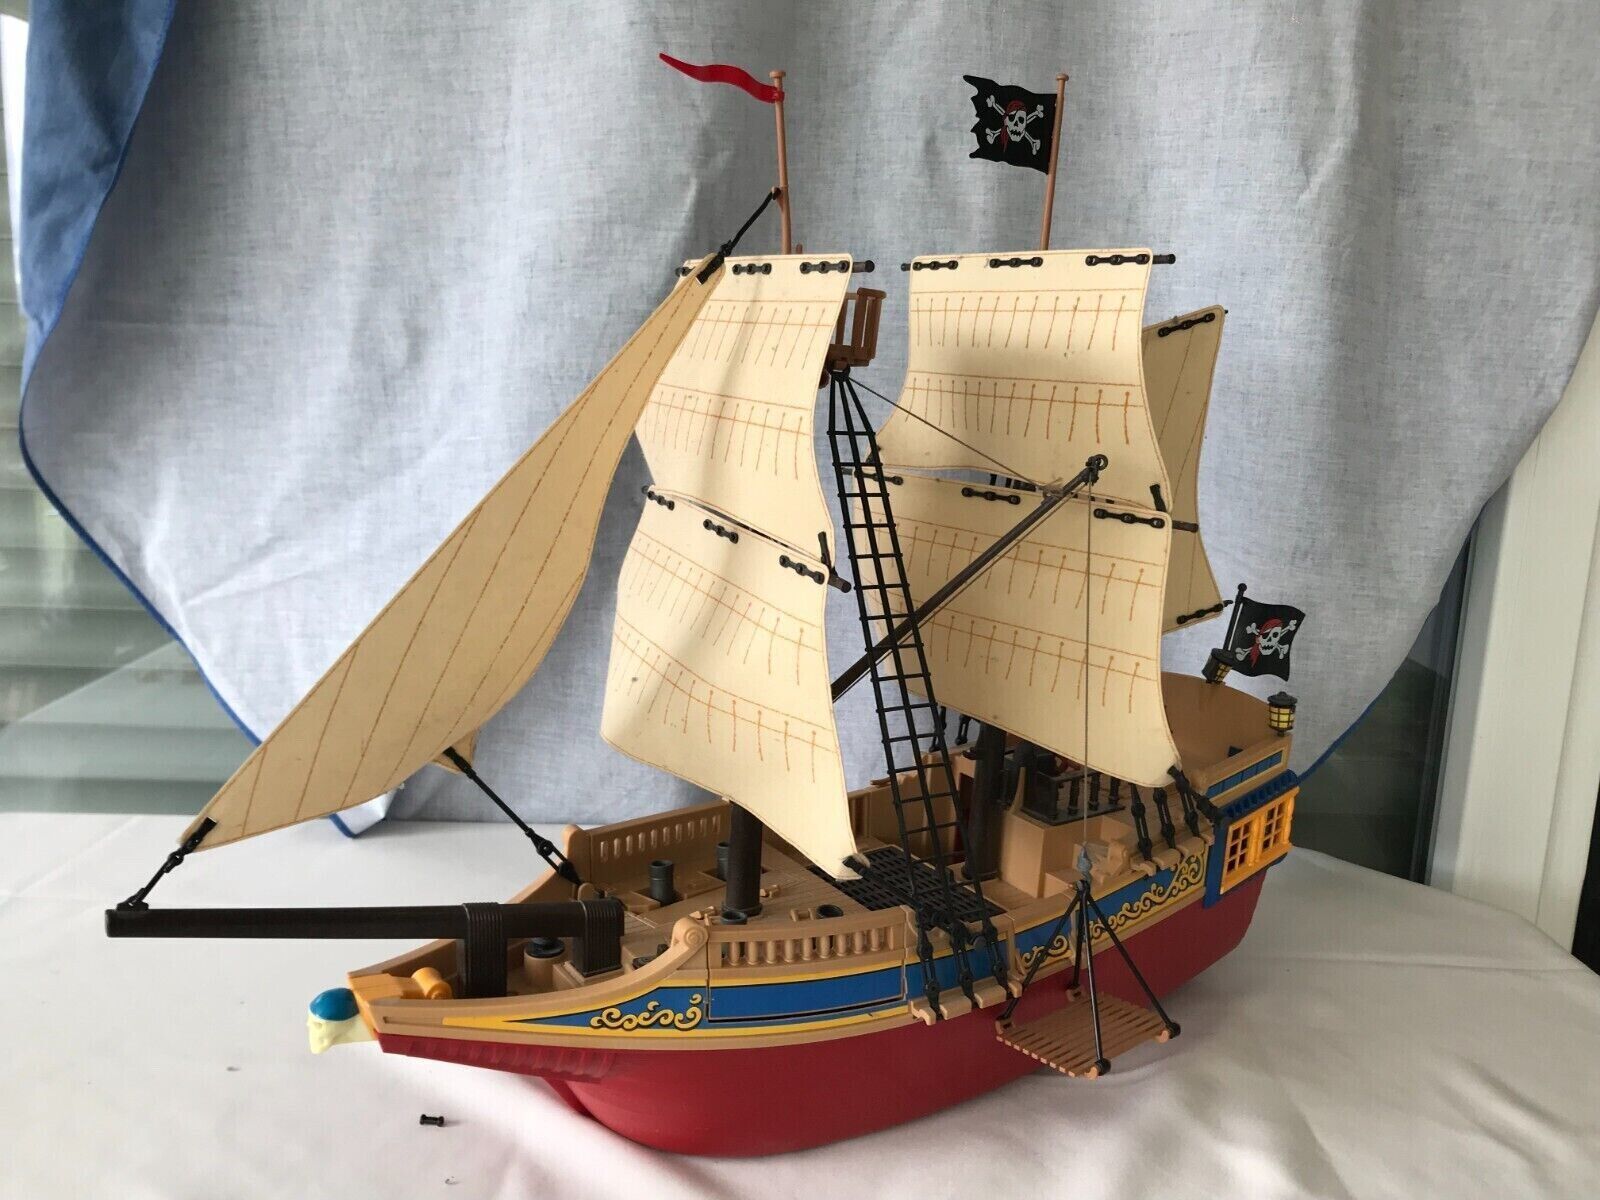 PLAYMOBIL Pirates 4290 : Grand bateau camouflage des pirates